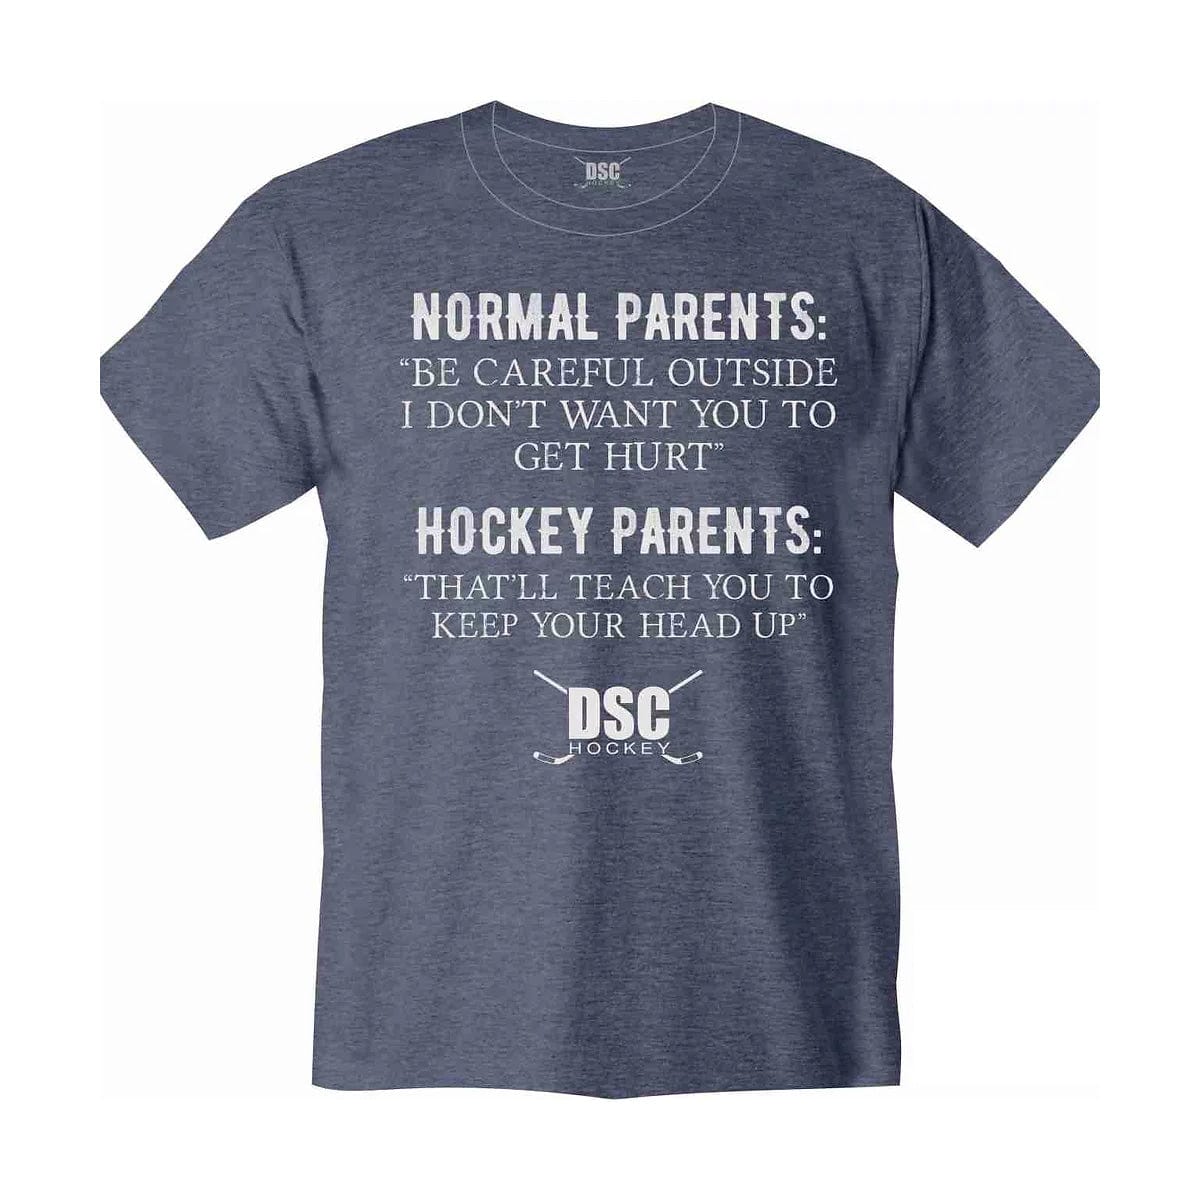 DSC Hockey Parents Mens Shirt - The Hockey Shop Source For Sports